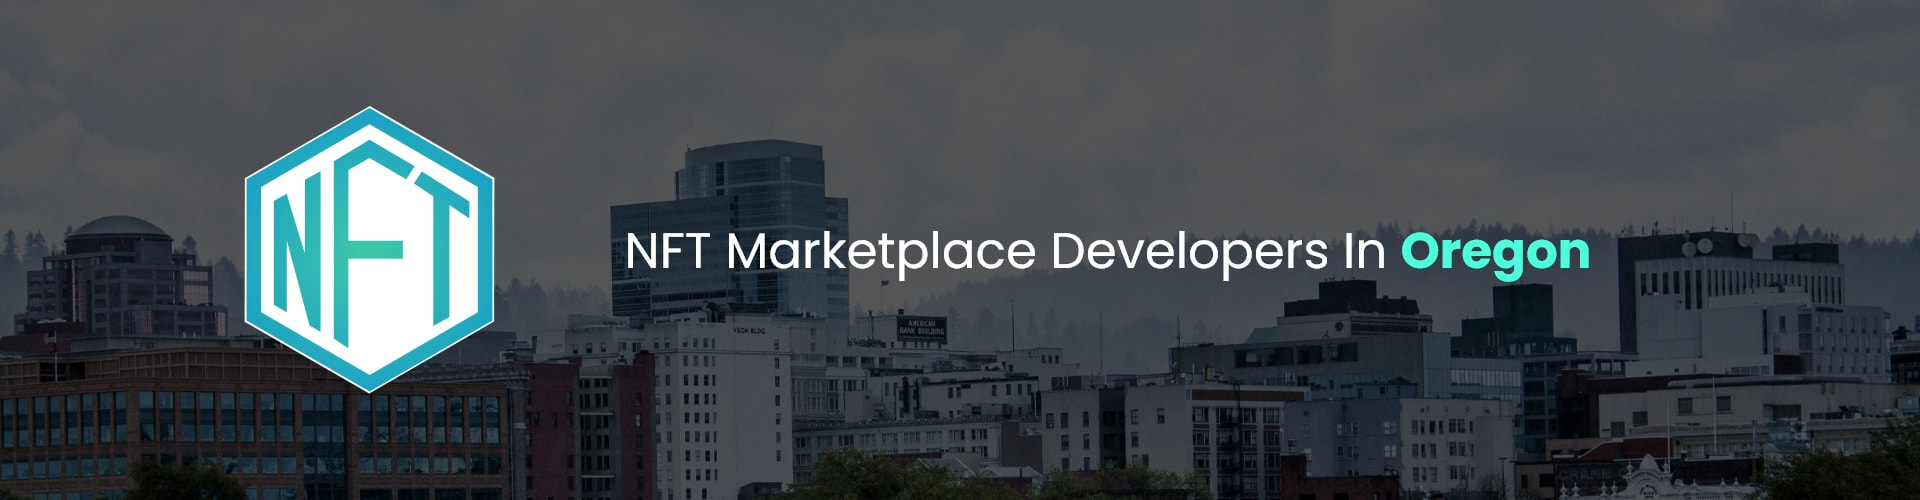 hire nft marketplace developers in oregon